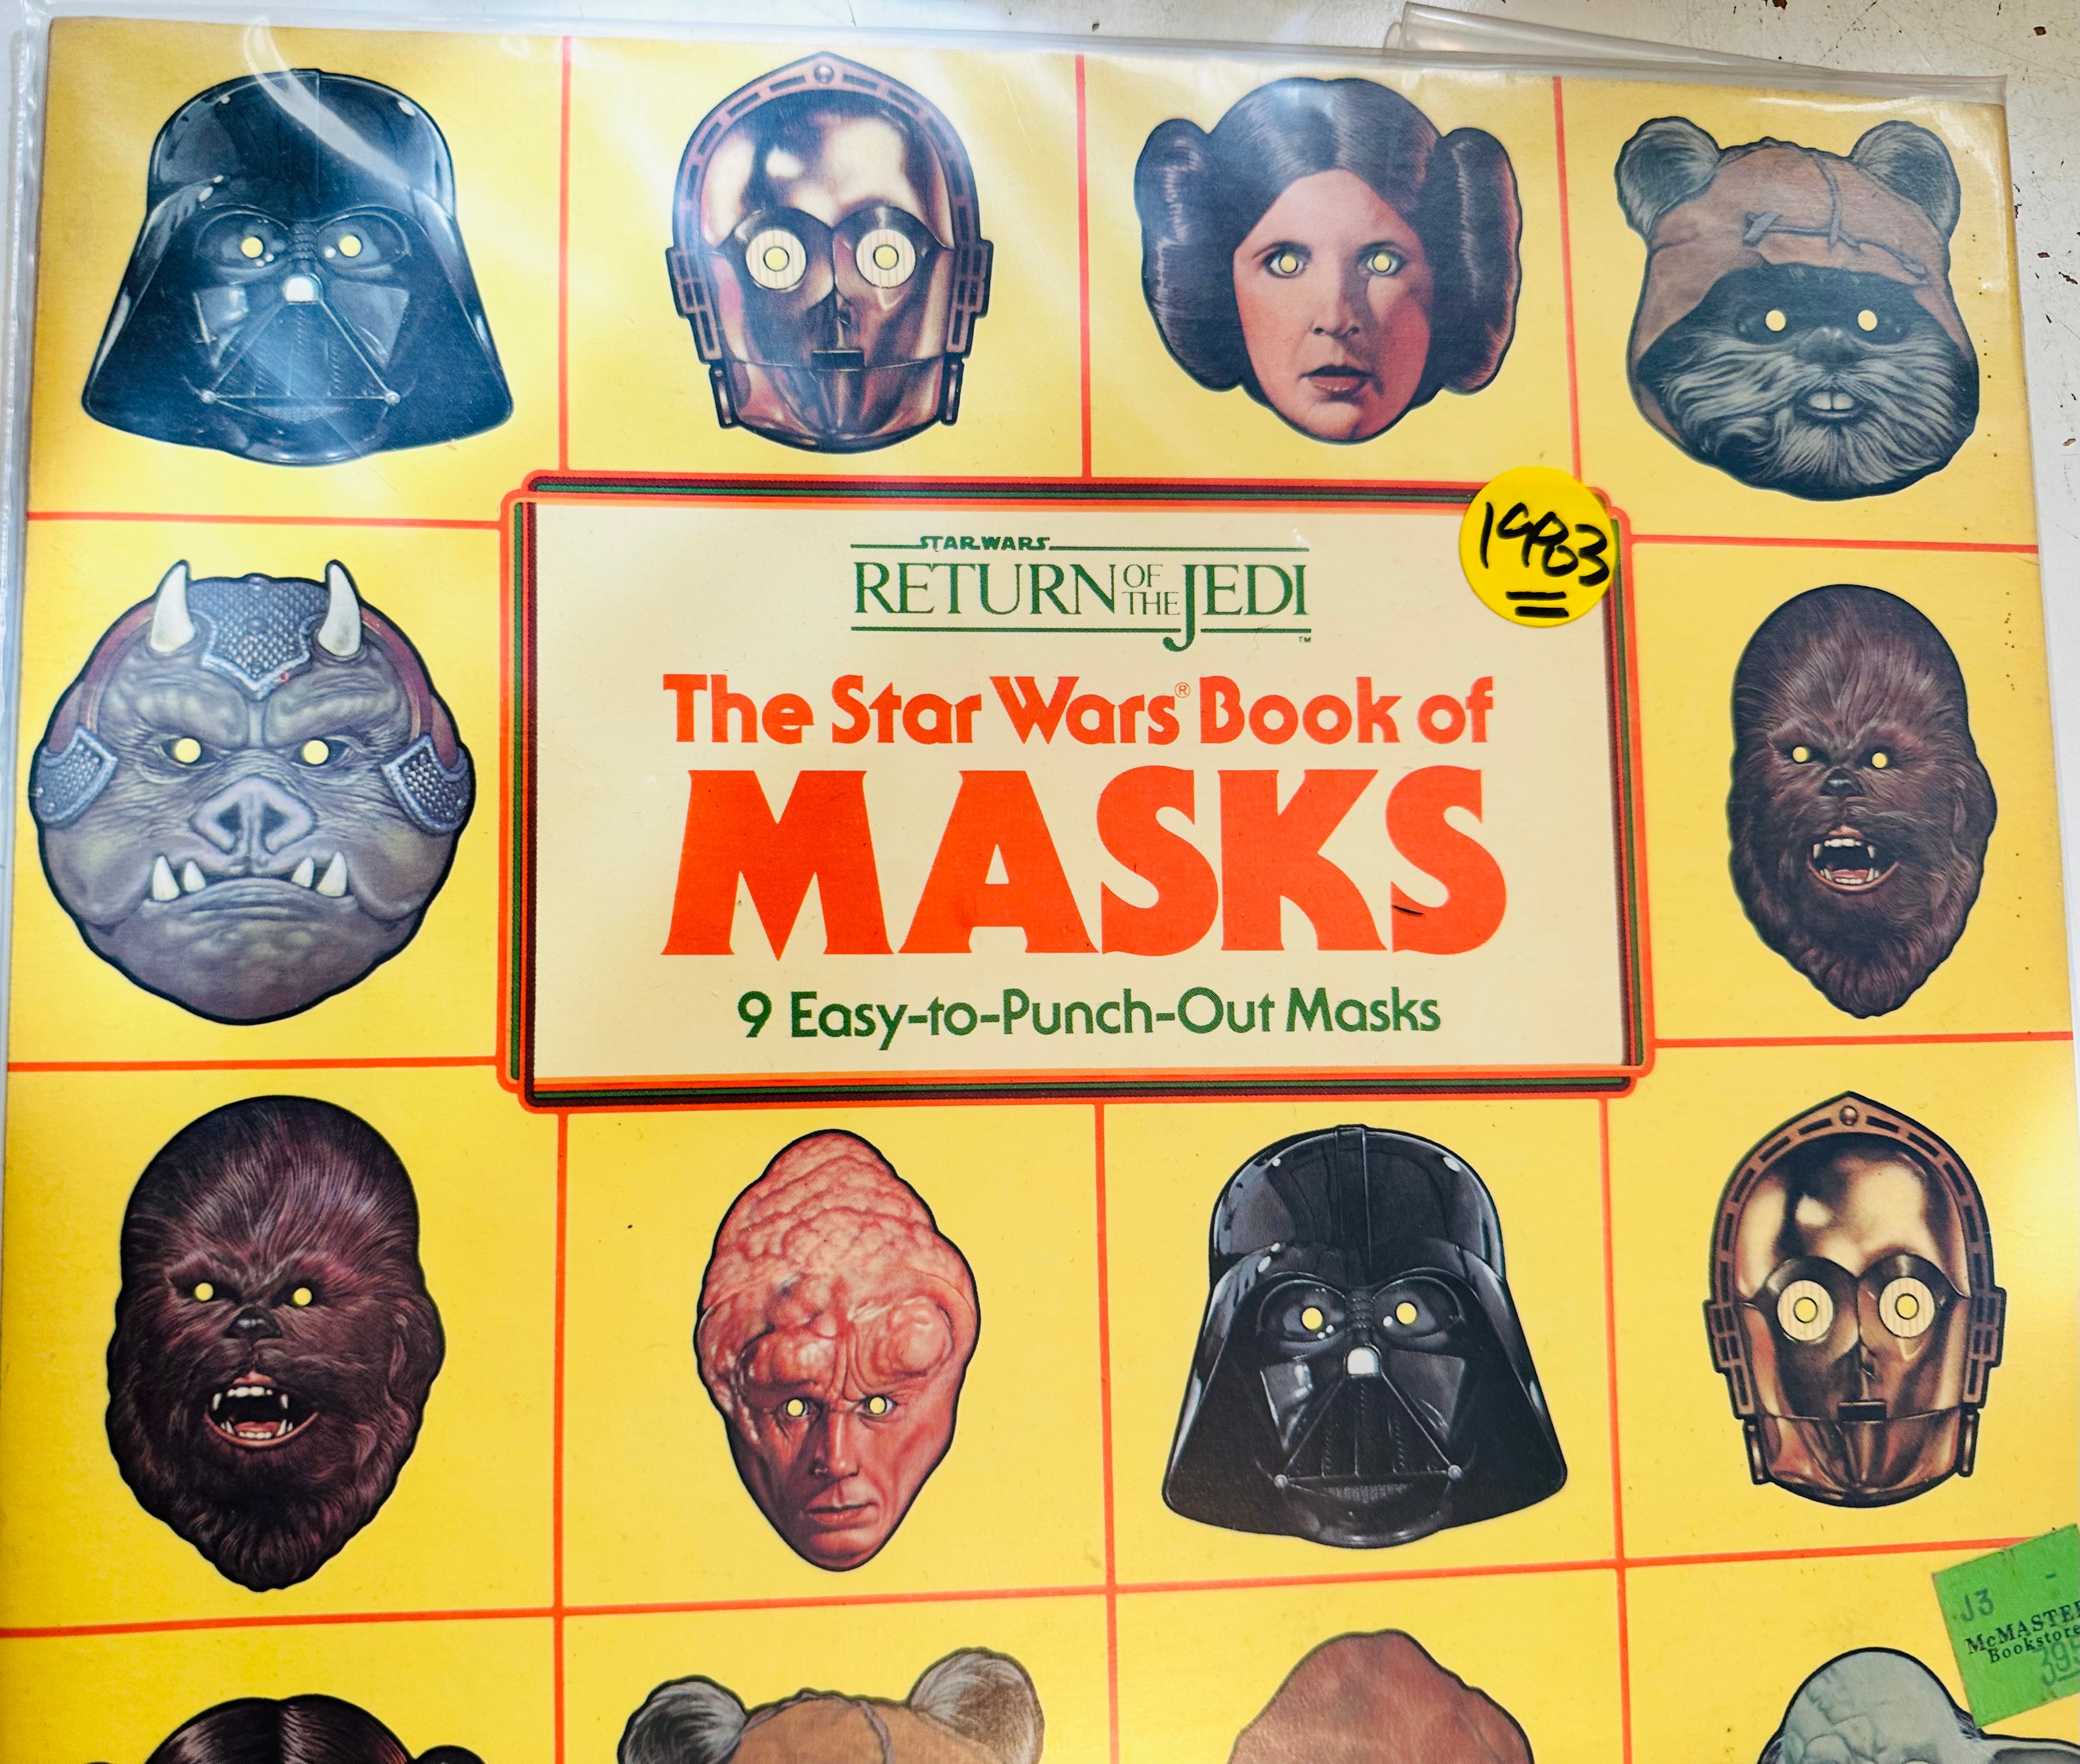 Star Wars book of Masks 1983